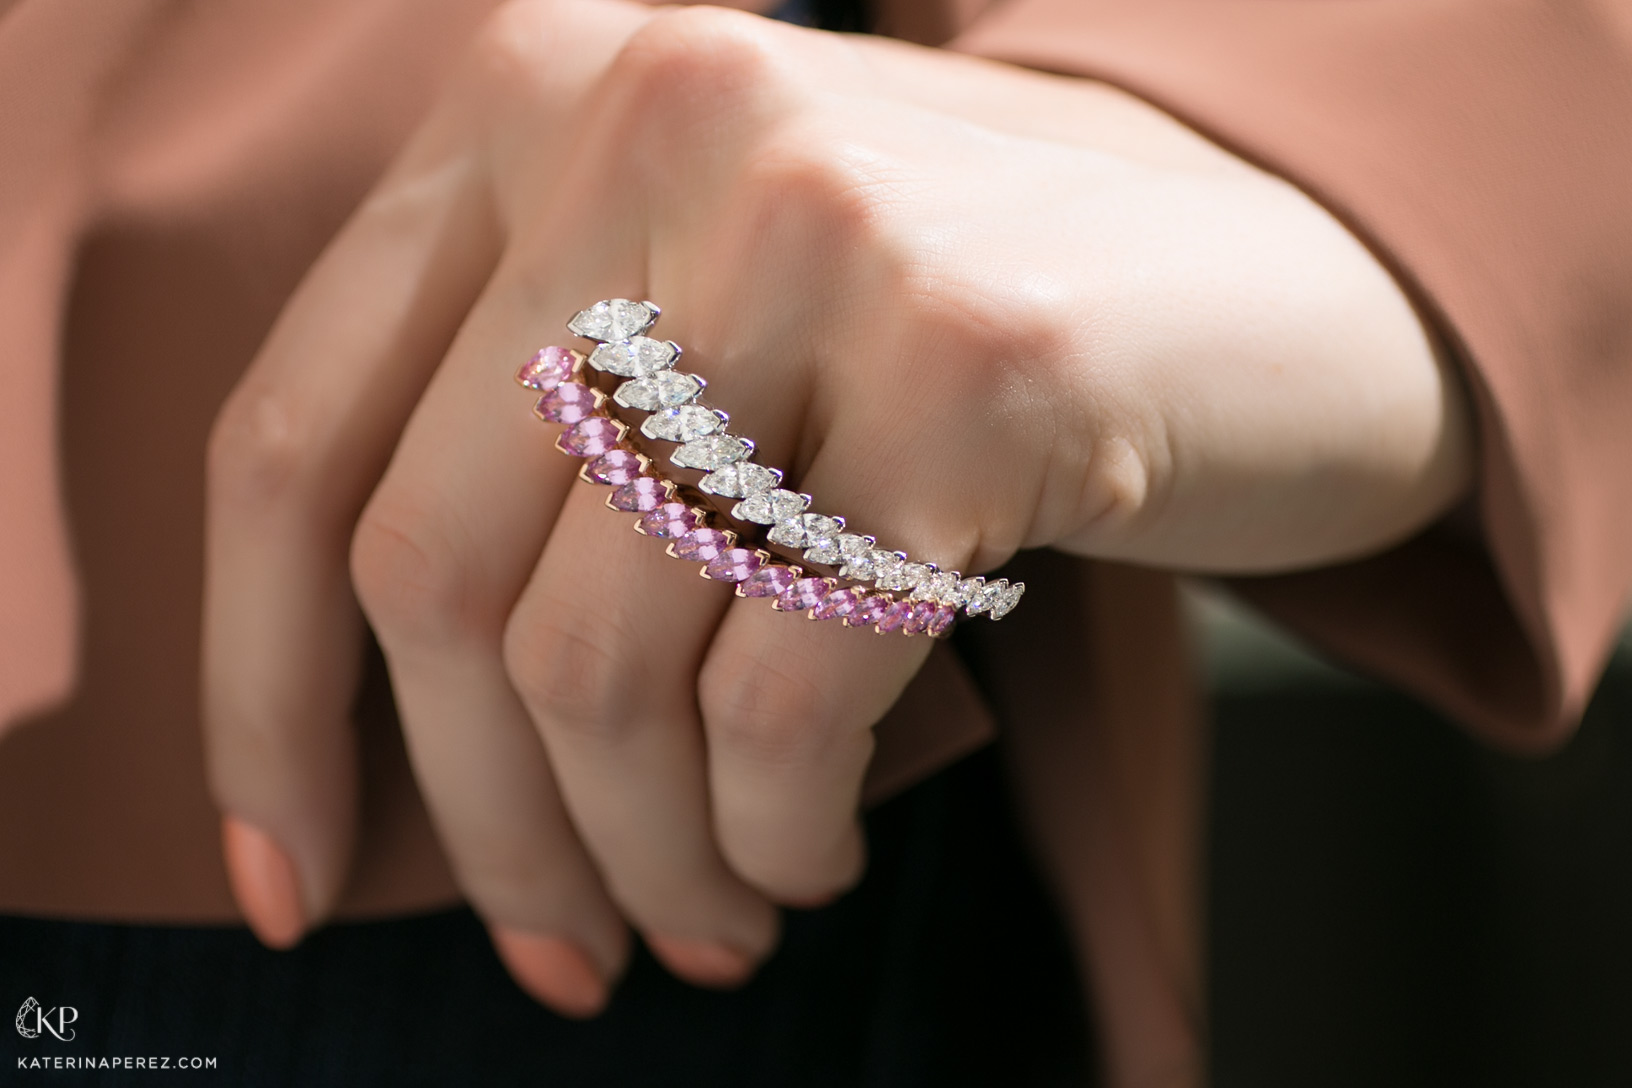 Кольца на два пальца Baenteli  "Каскад" с розовыми сапфирами и бриллиантами